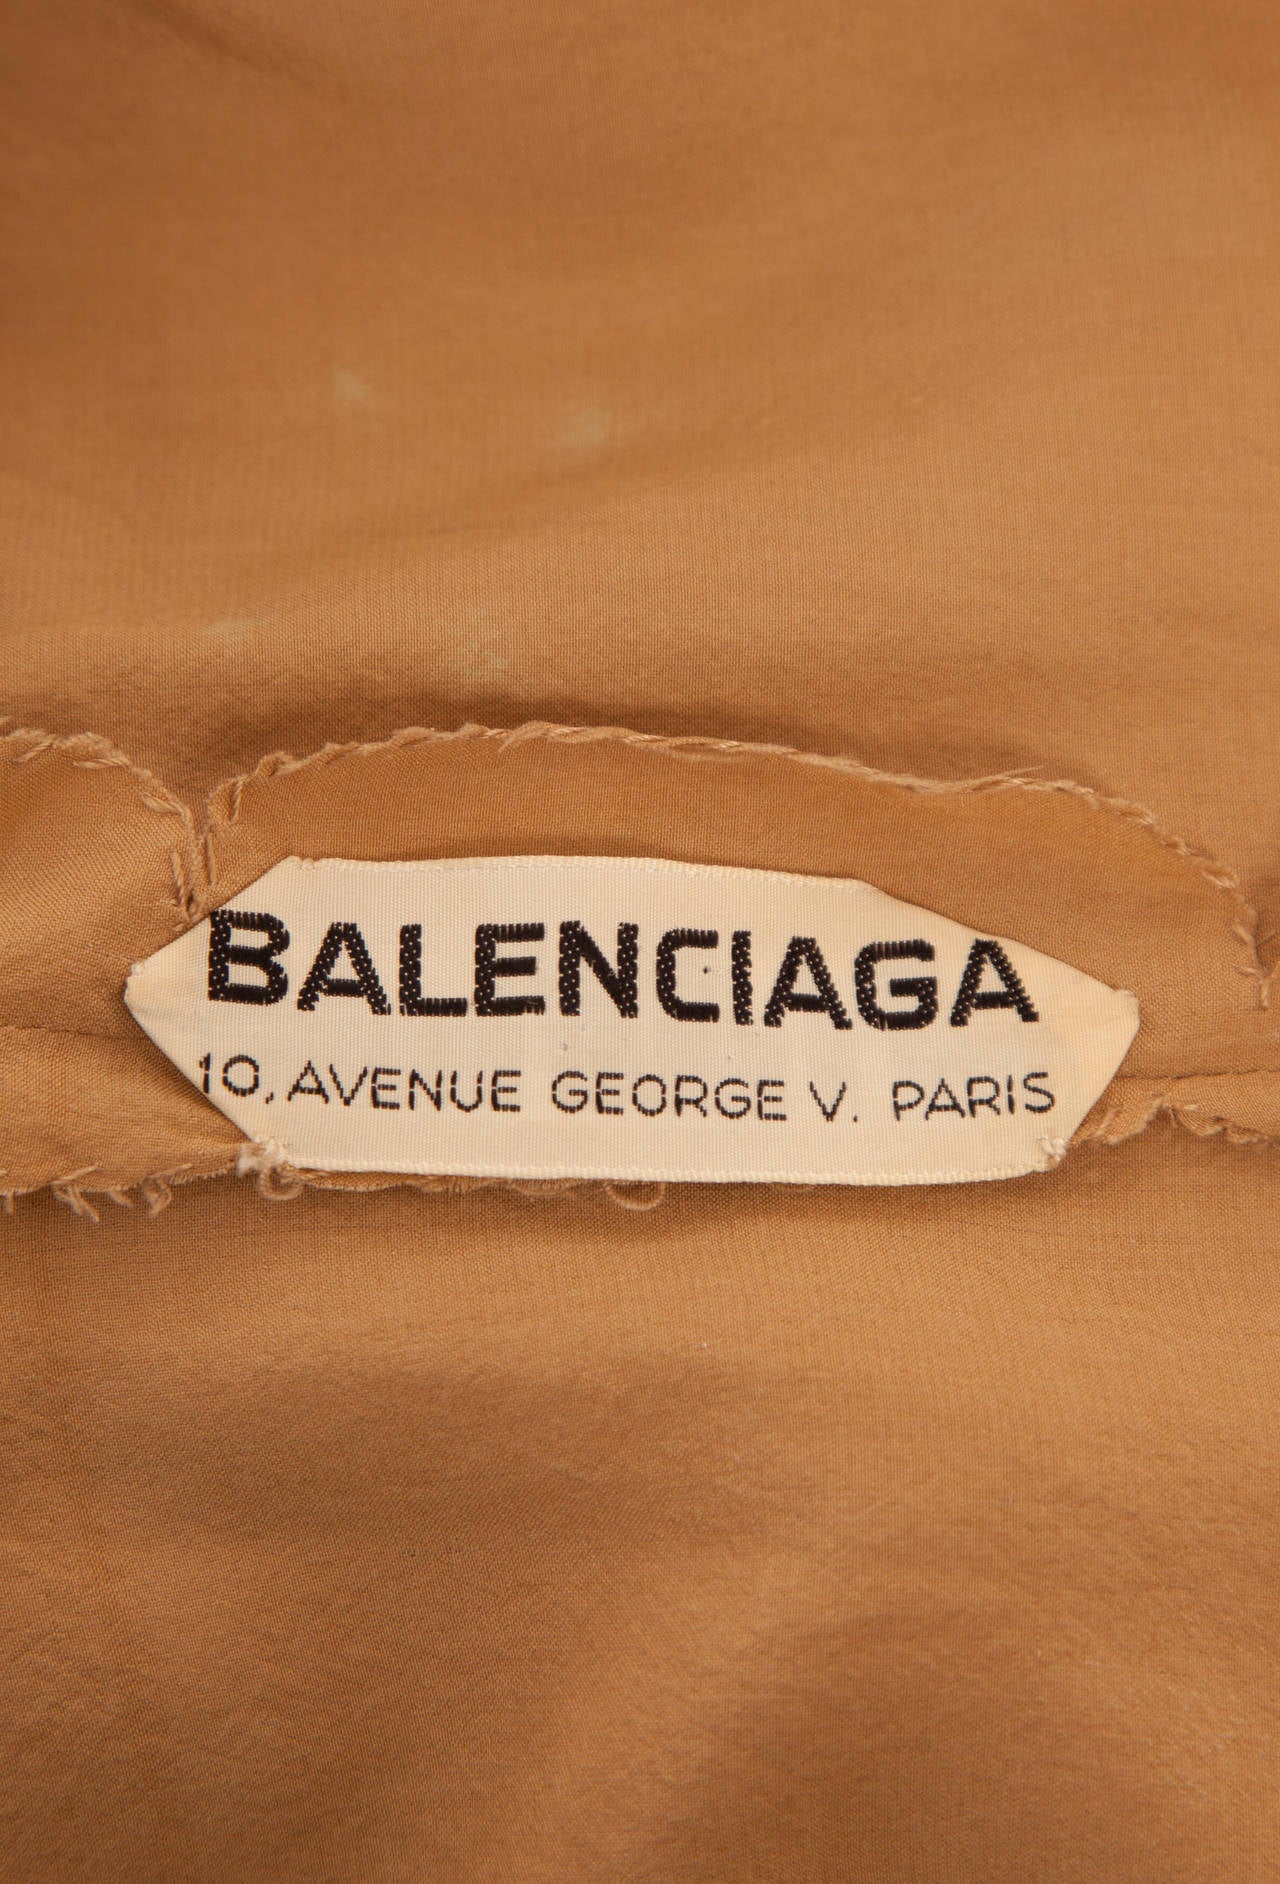 Balenciaga haute couture caramel lace dress, spring summer 1964 For Sale 2